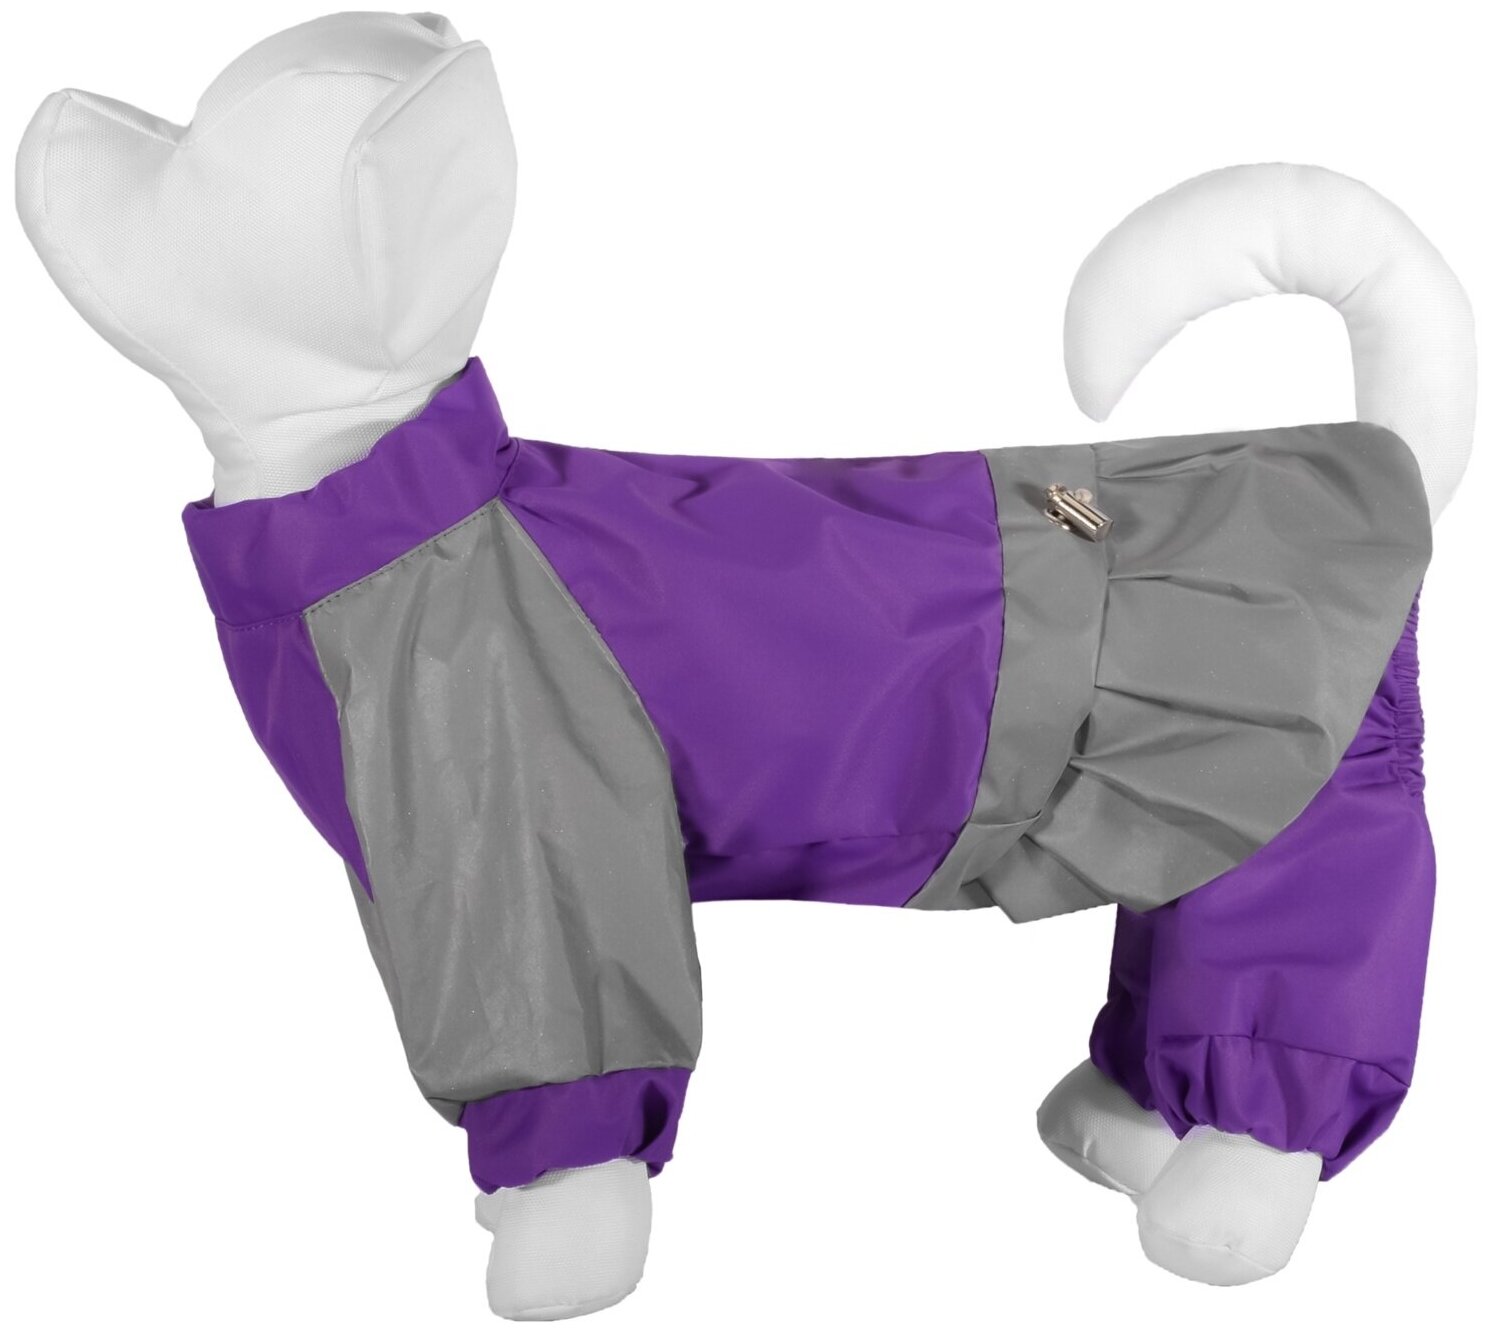 Tappi комбинезон Оллибоди для собак, на девочку, на атласной подкладке, размер M (спинка 30-33 см)